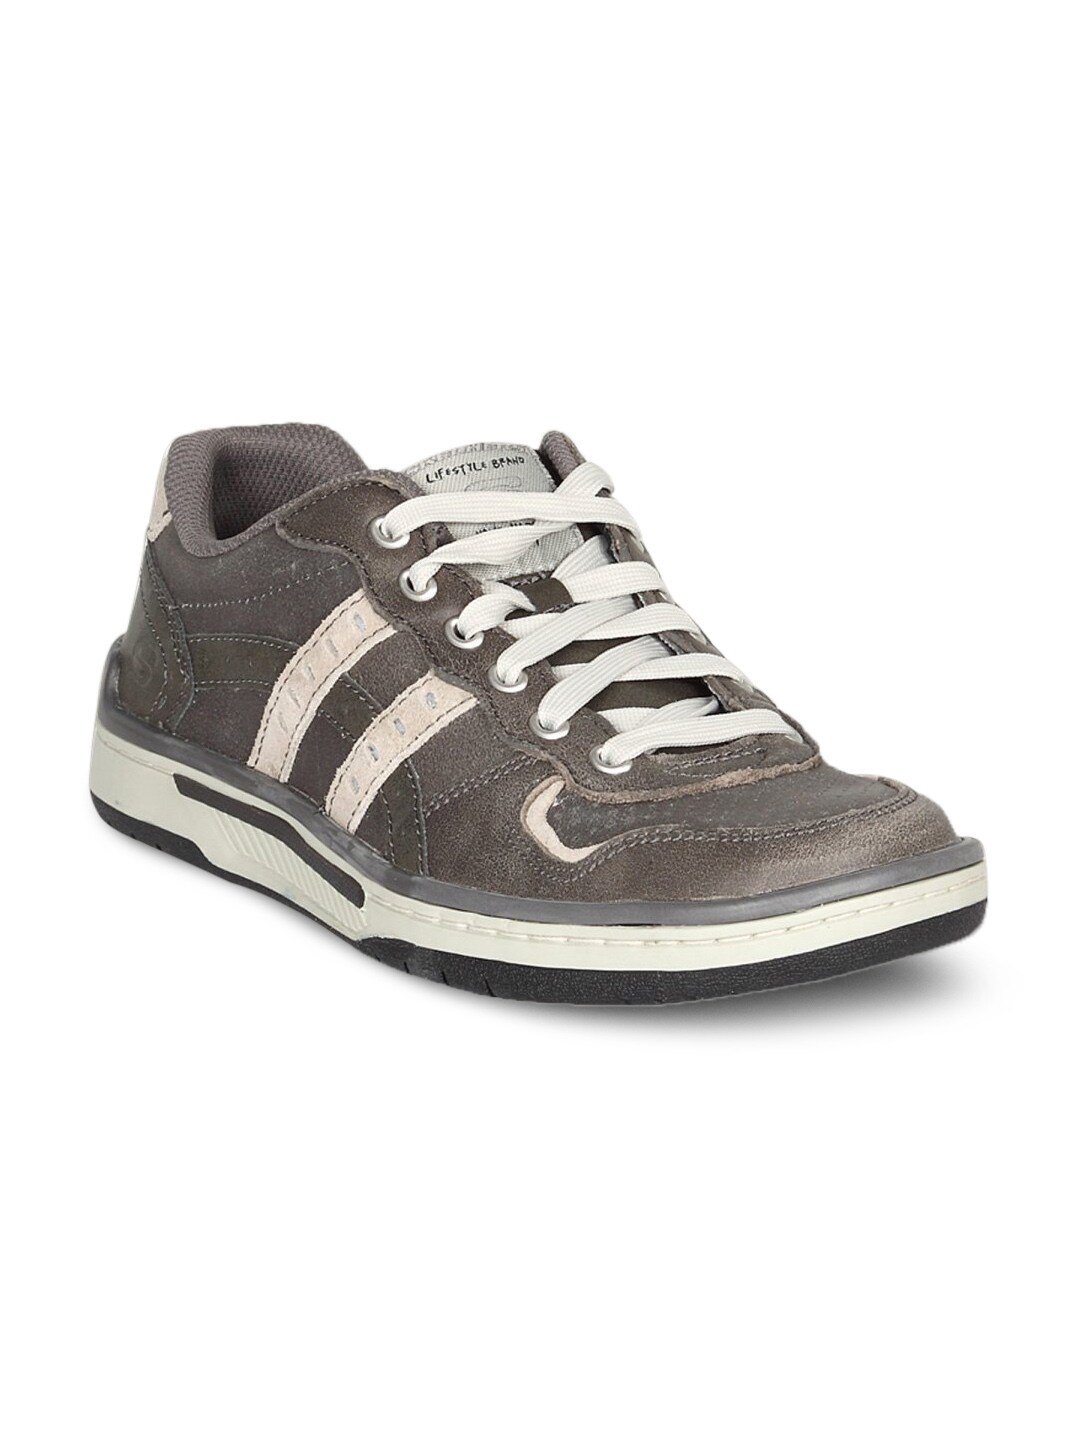 Skechers Men's Casual  Charcoal Shoe